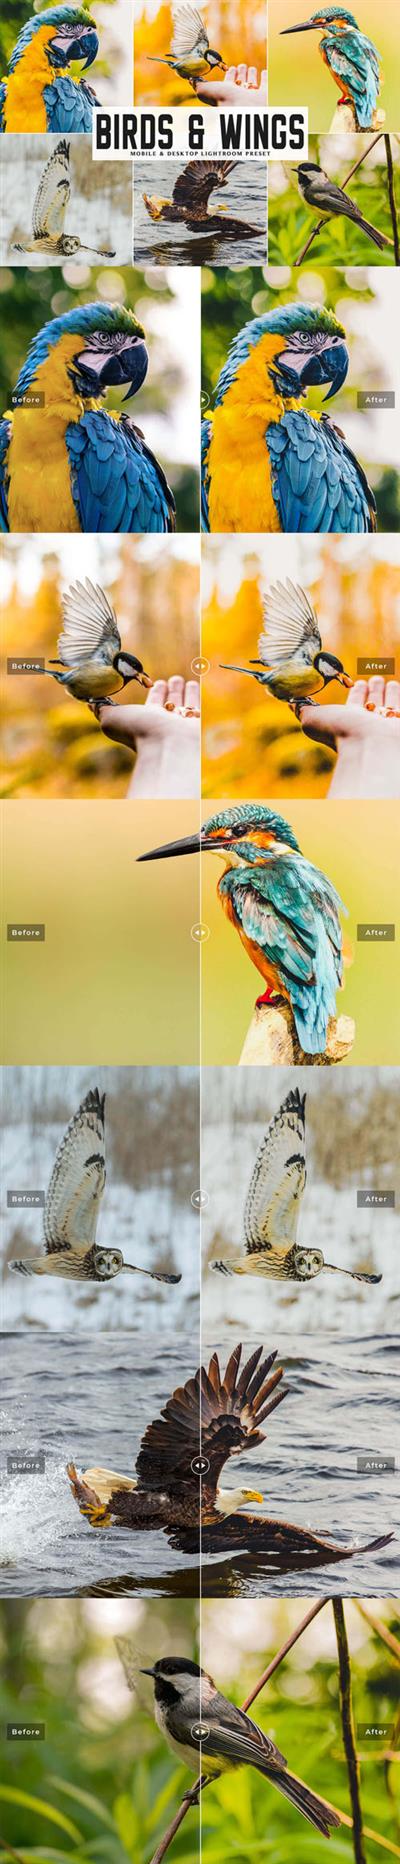 Birds & Wings Mobile & Desktop Lightroom Presets